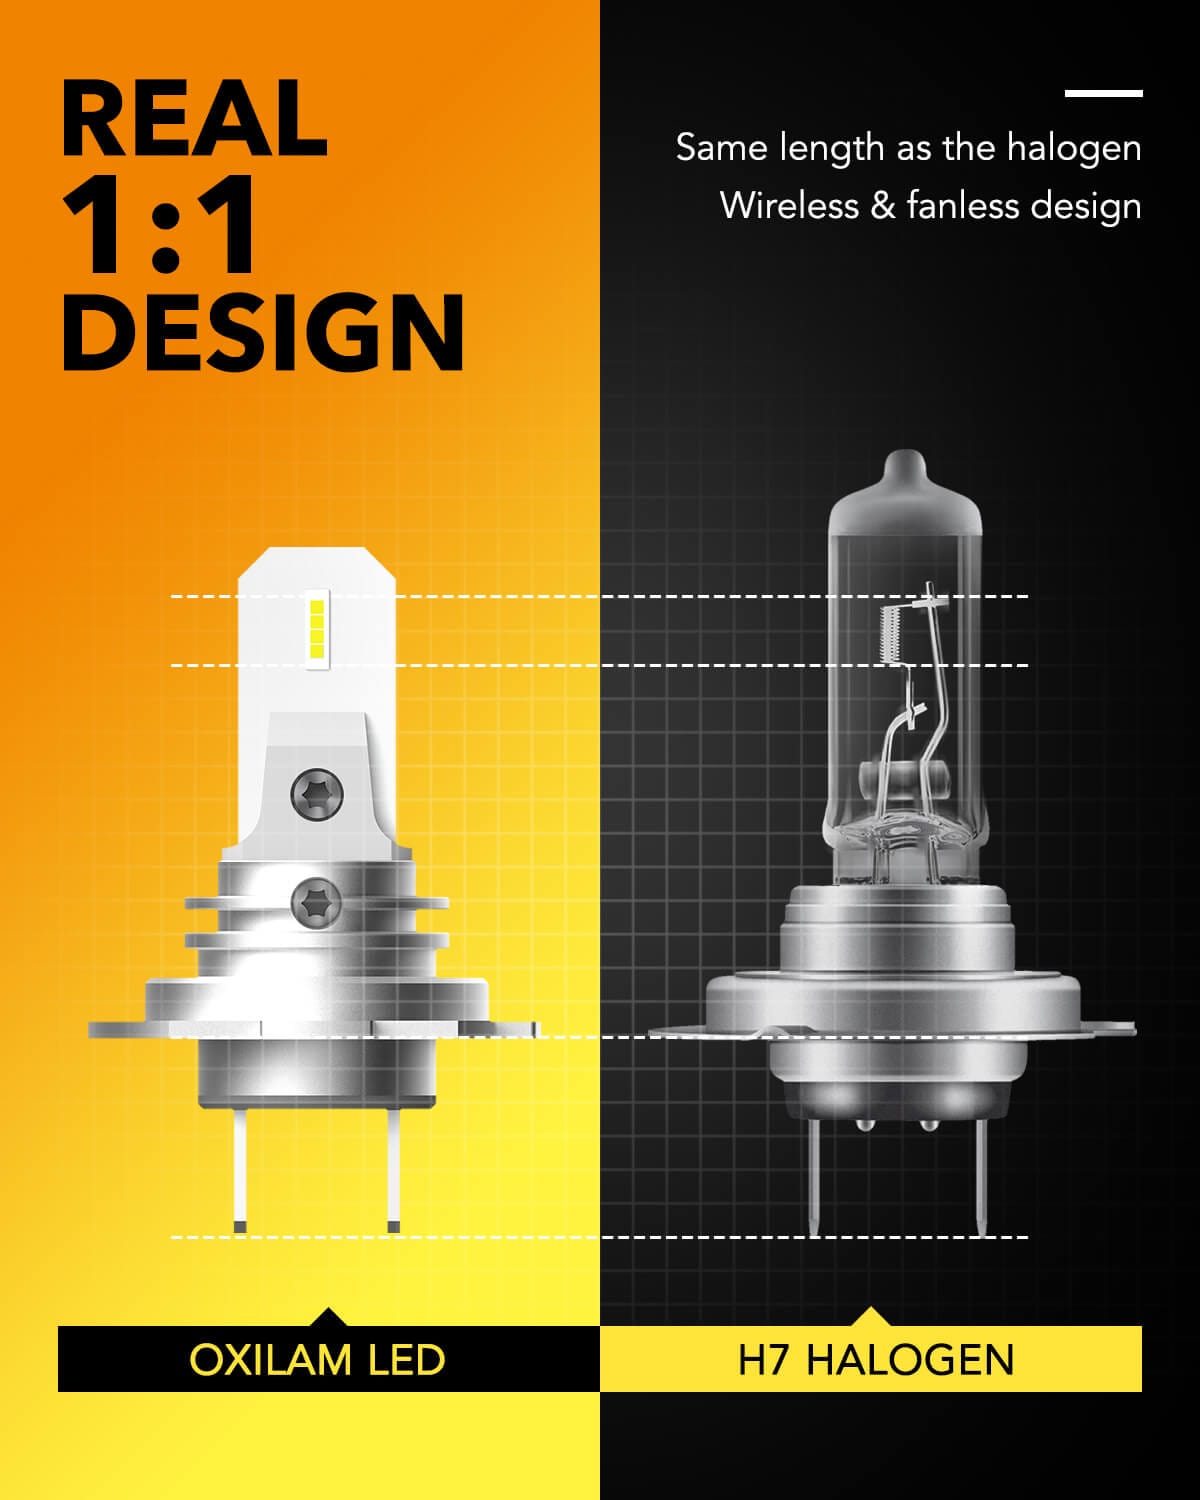 CARIFEX® Non-Flickering LED Headlight - H8/H9/H11 – Carifex